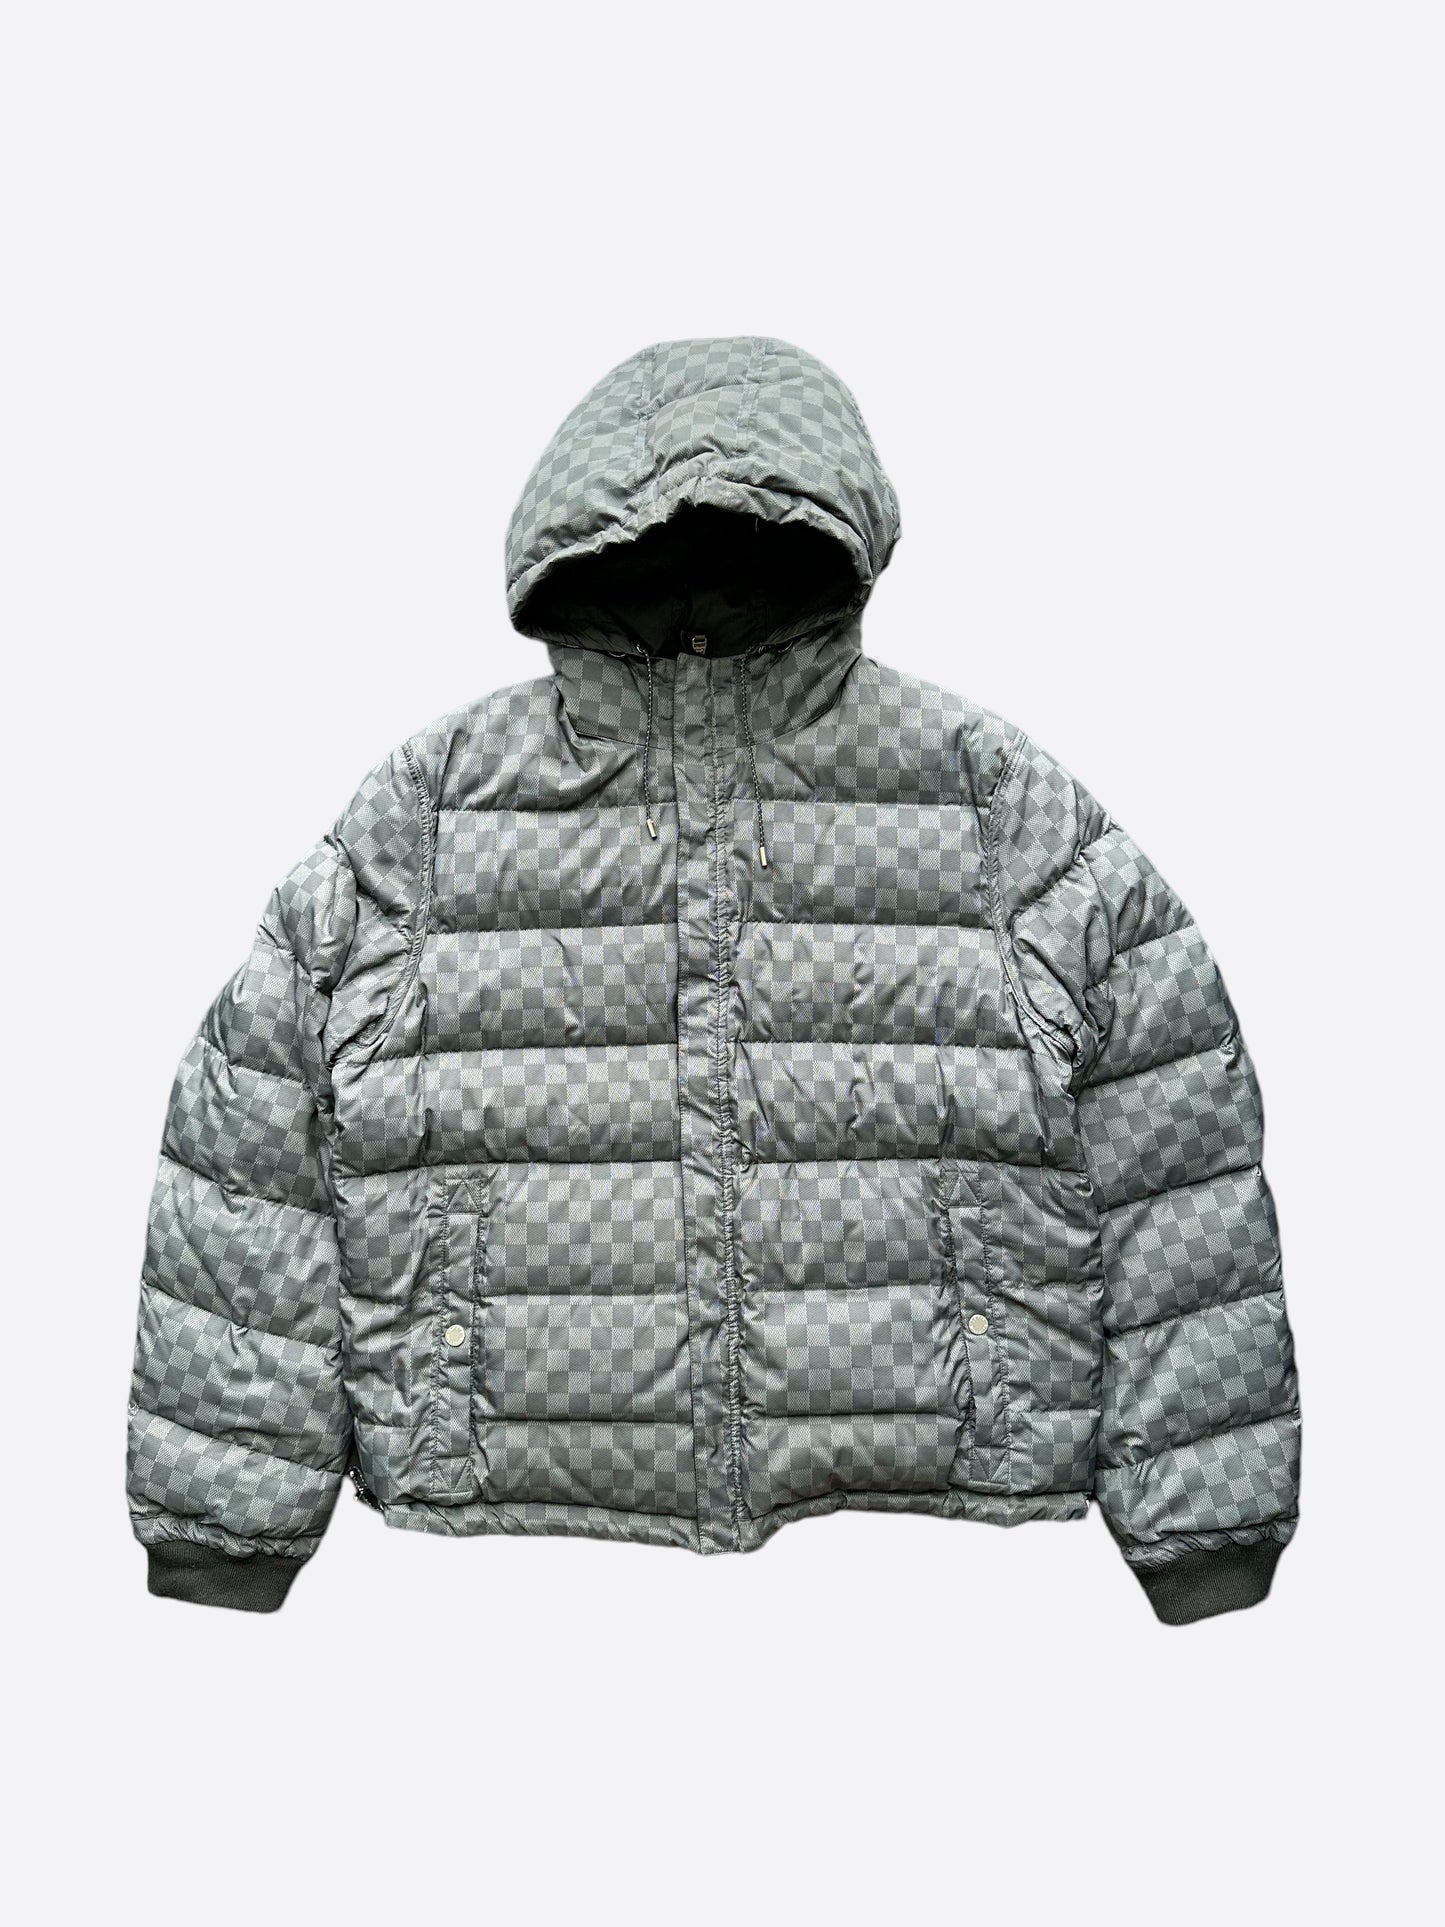 Louis Vuitton Reversible Pinstripe Hooded Jacket